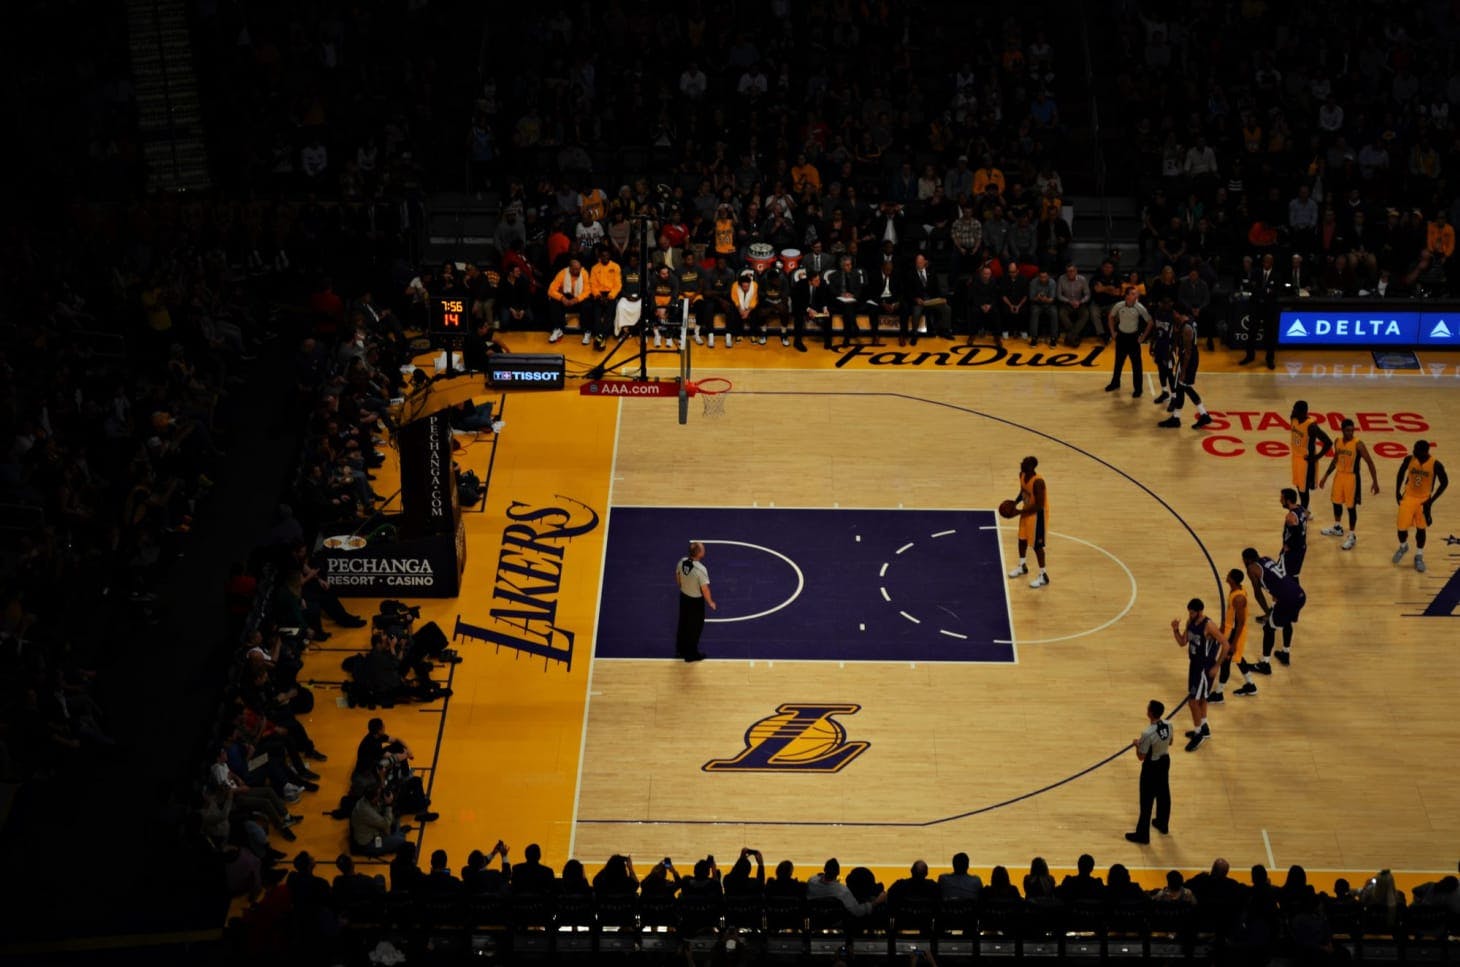 Potential final game coming up between Heats vs Lakers